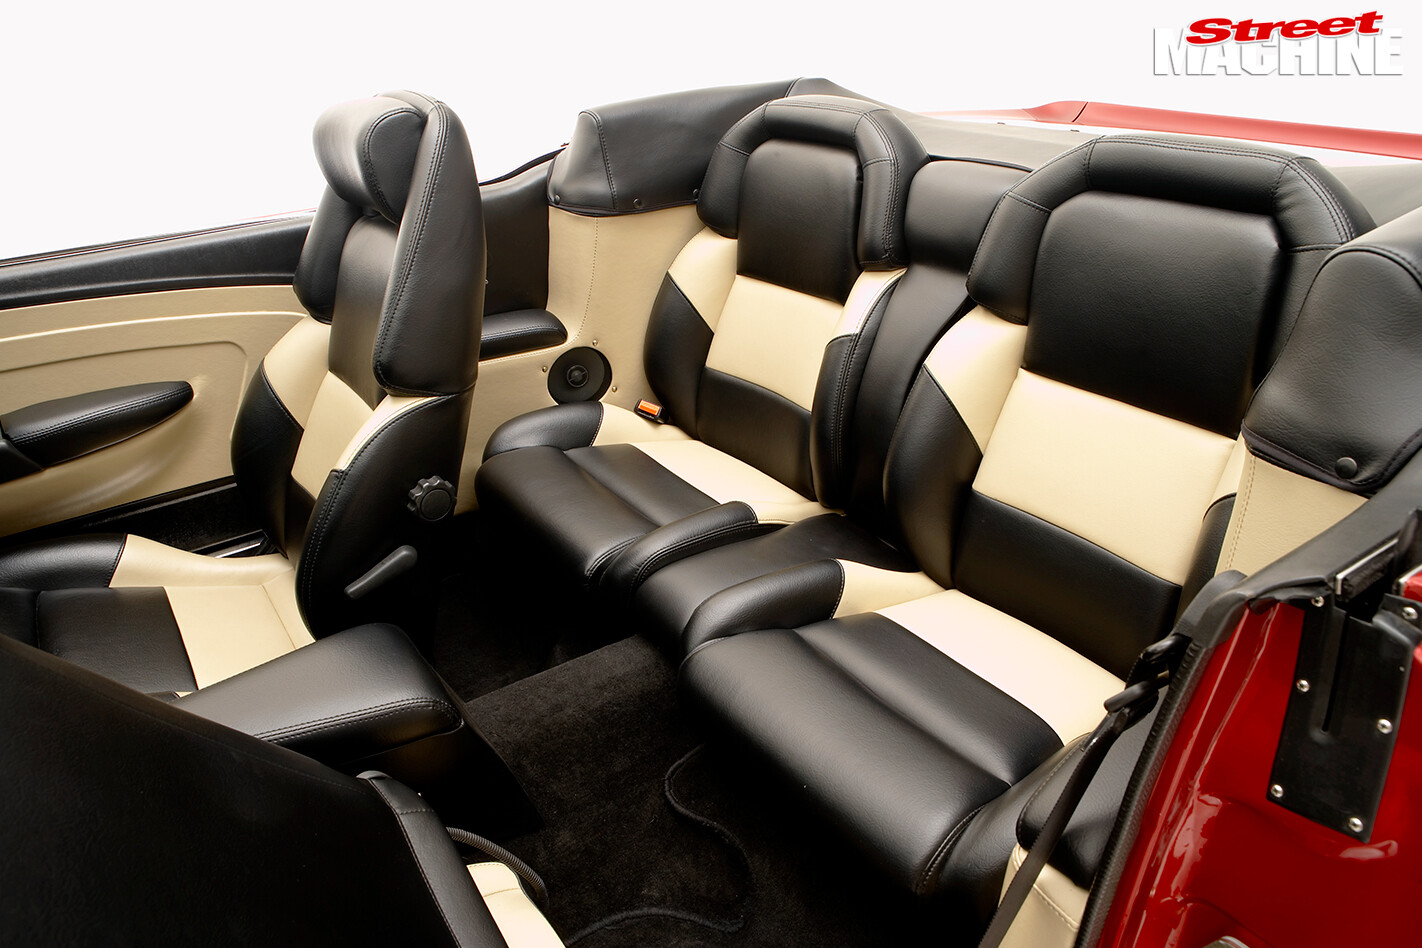 Marshall -Perron -Pro -Touring -Mustang -interior -2